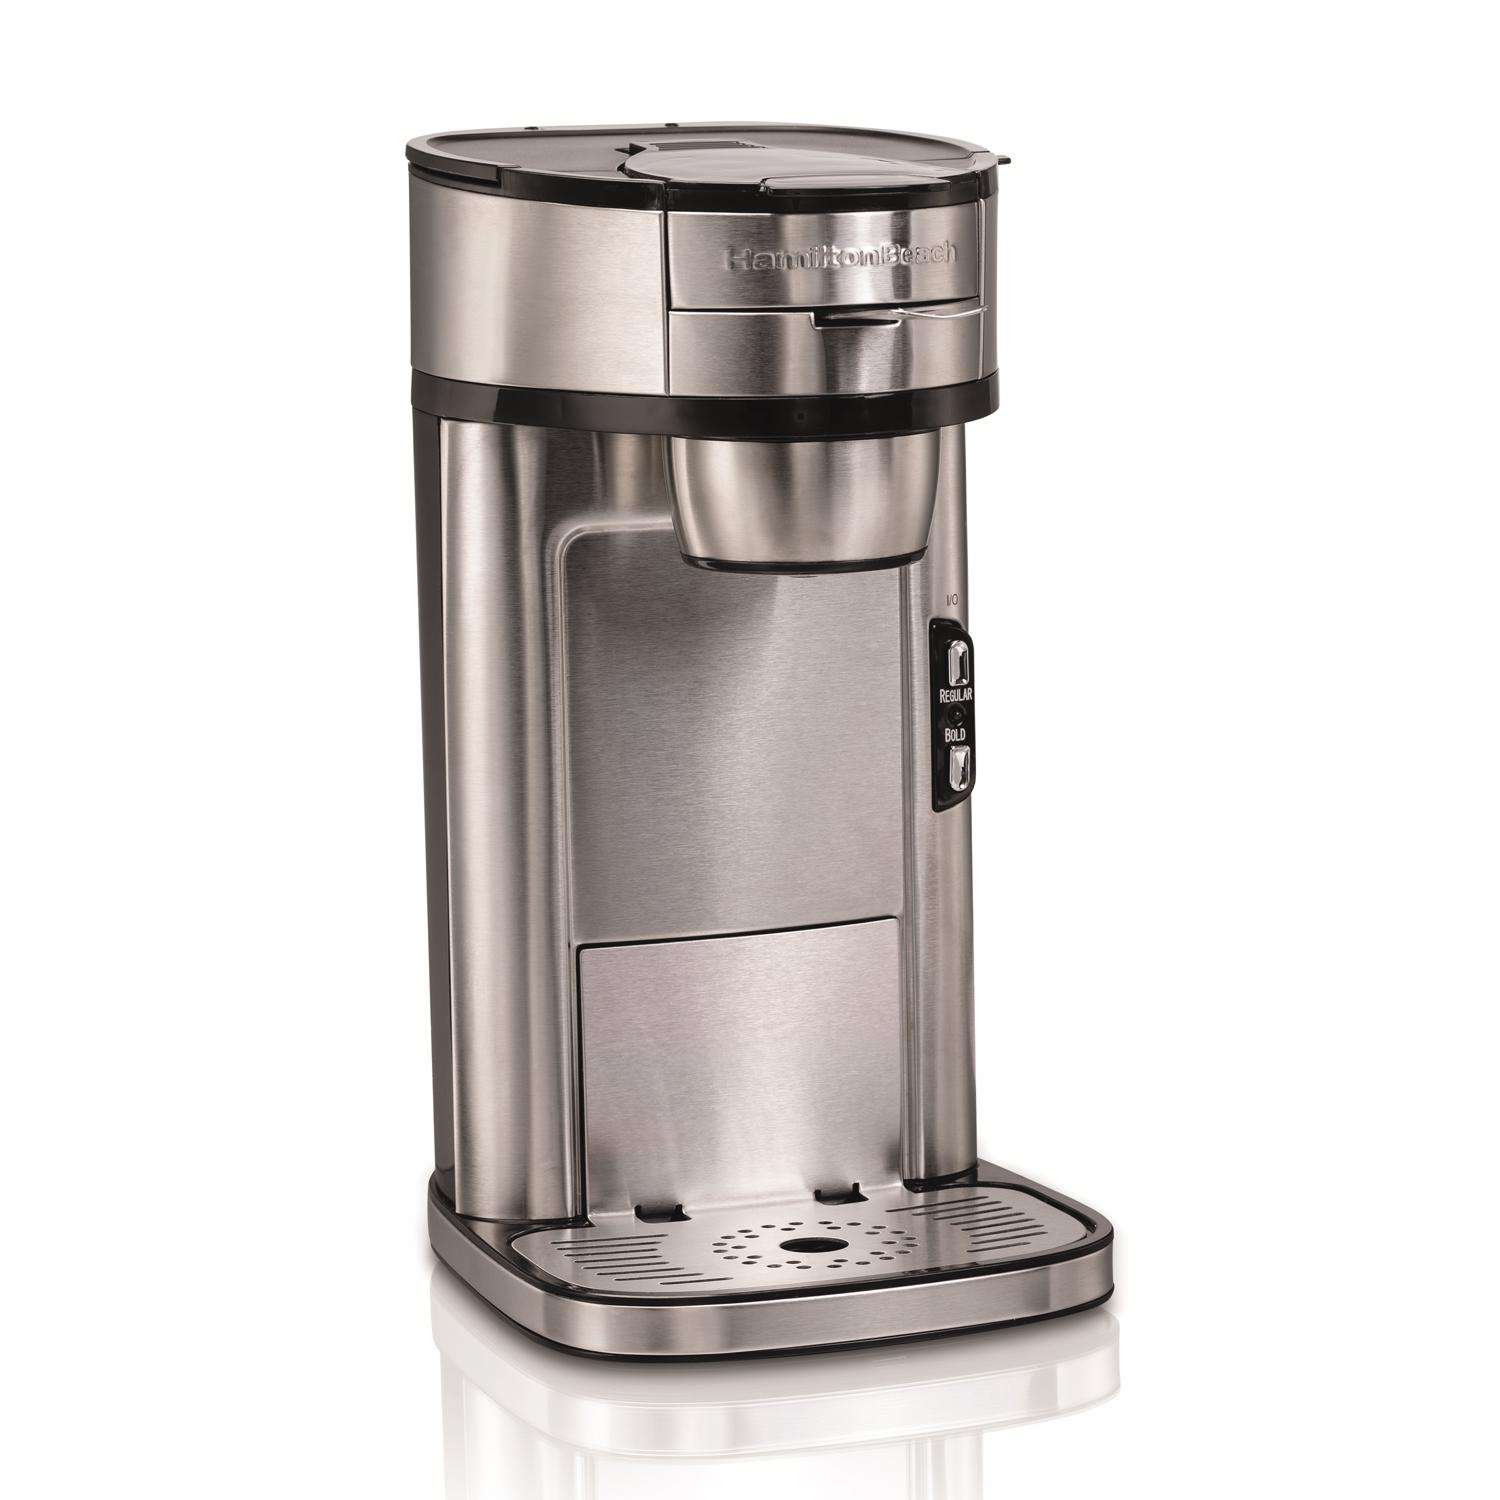 Mueller 12-Cup Drip Coffee Maker, Auto Keep Warm Function, Smart